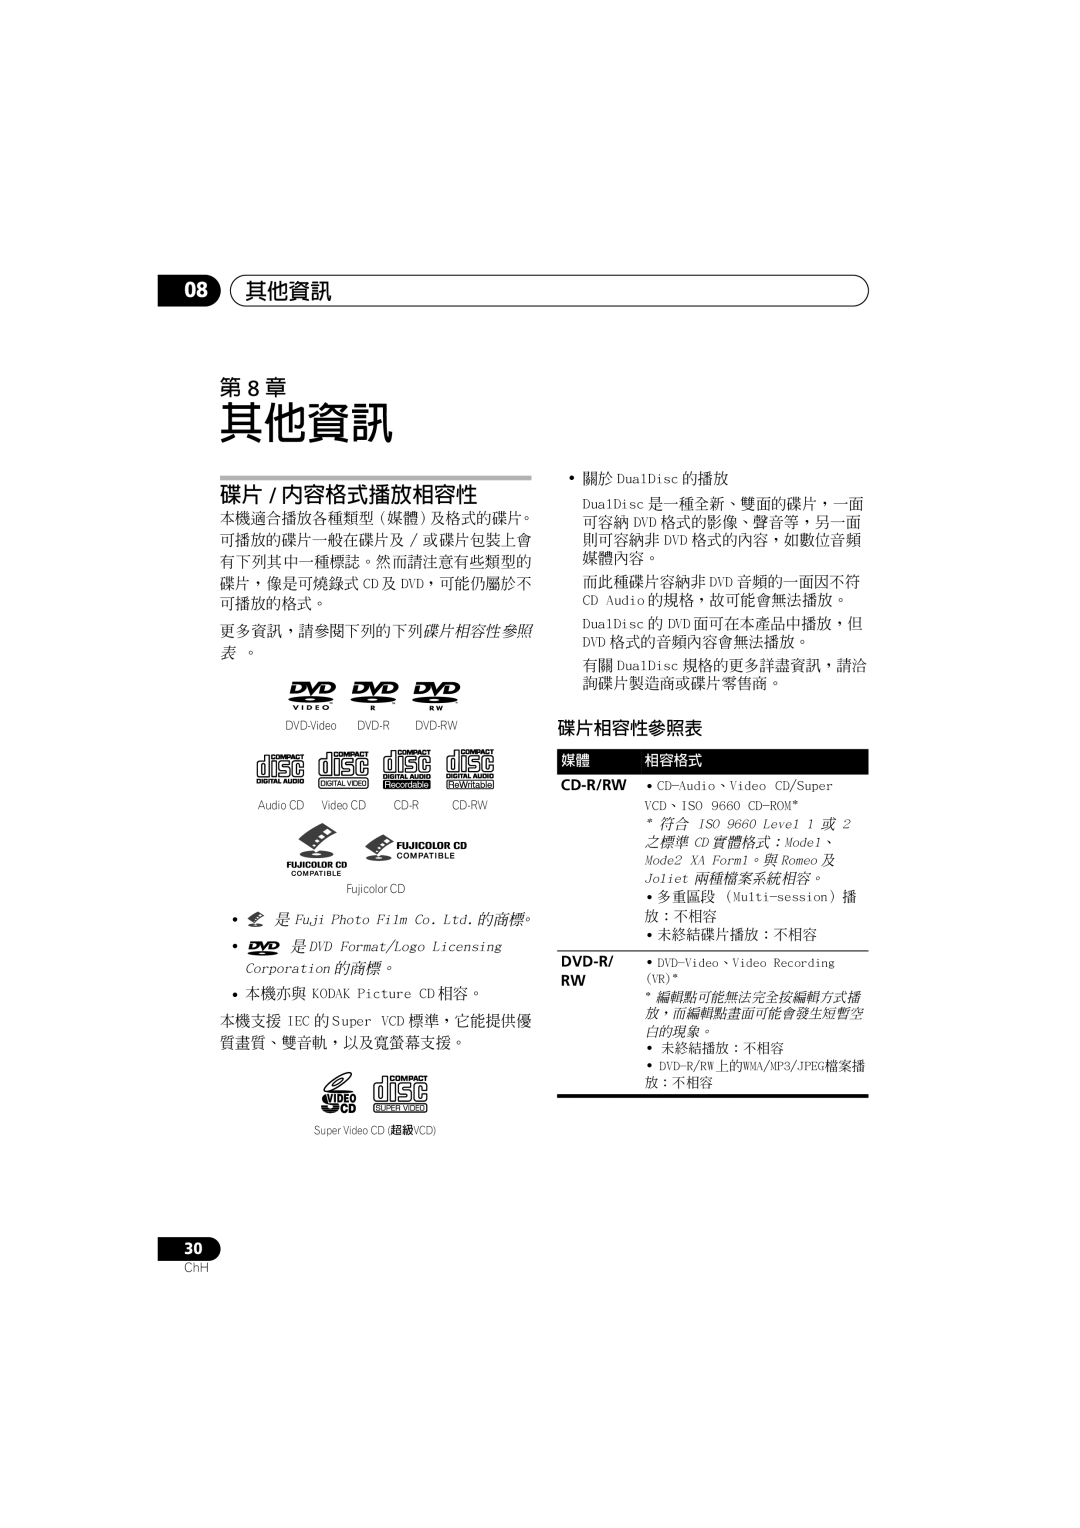 Pioneer S-DV131 manual 08其他資訊 第 8 章, 碟片 / 內容格式播放相容性, 碟片相容性參照表, 是 DVD Format/Logo Licensing Corporation 的商標。, 媒體 相容格式 